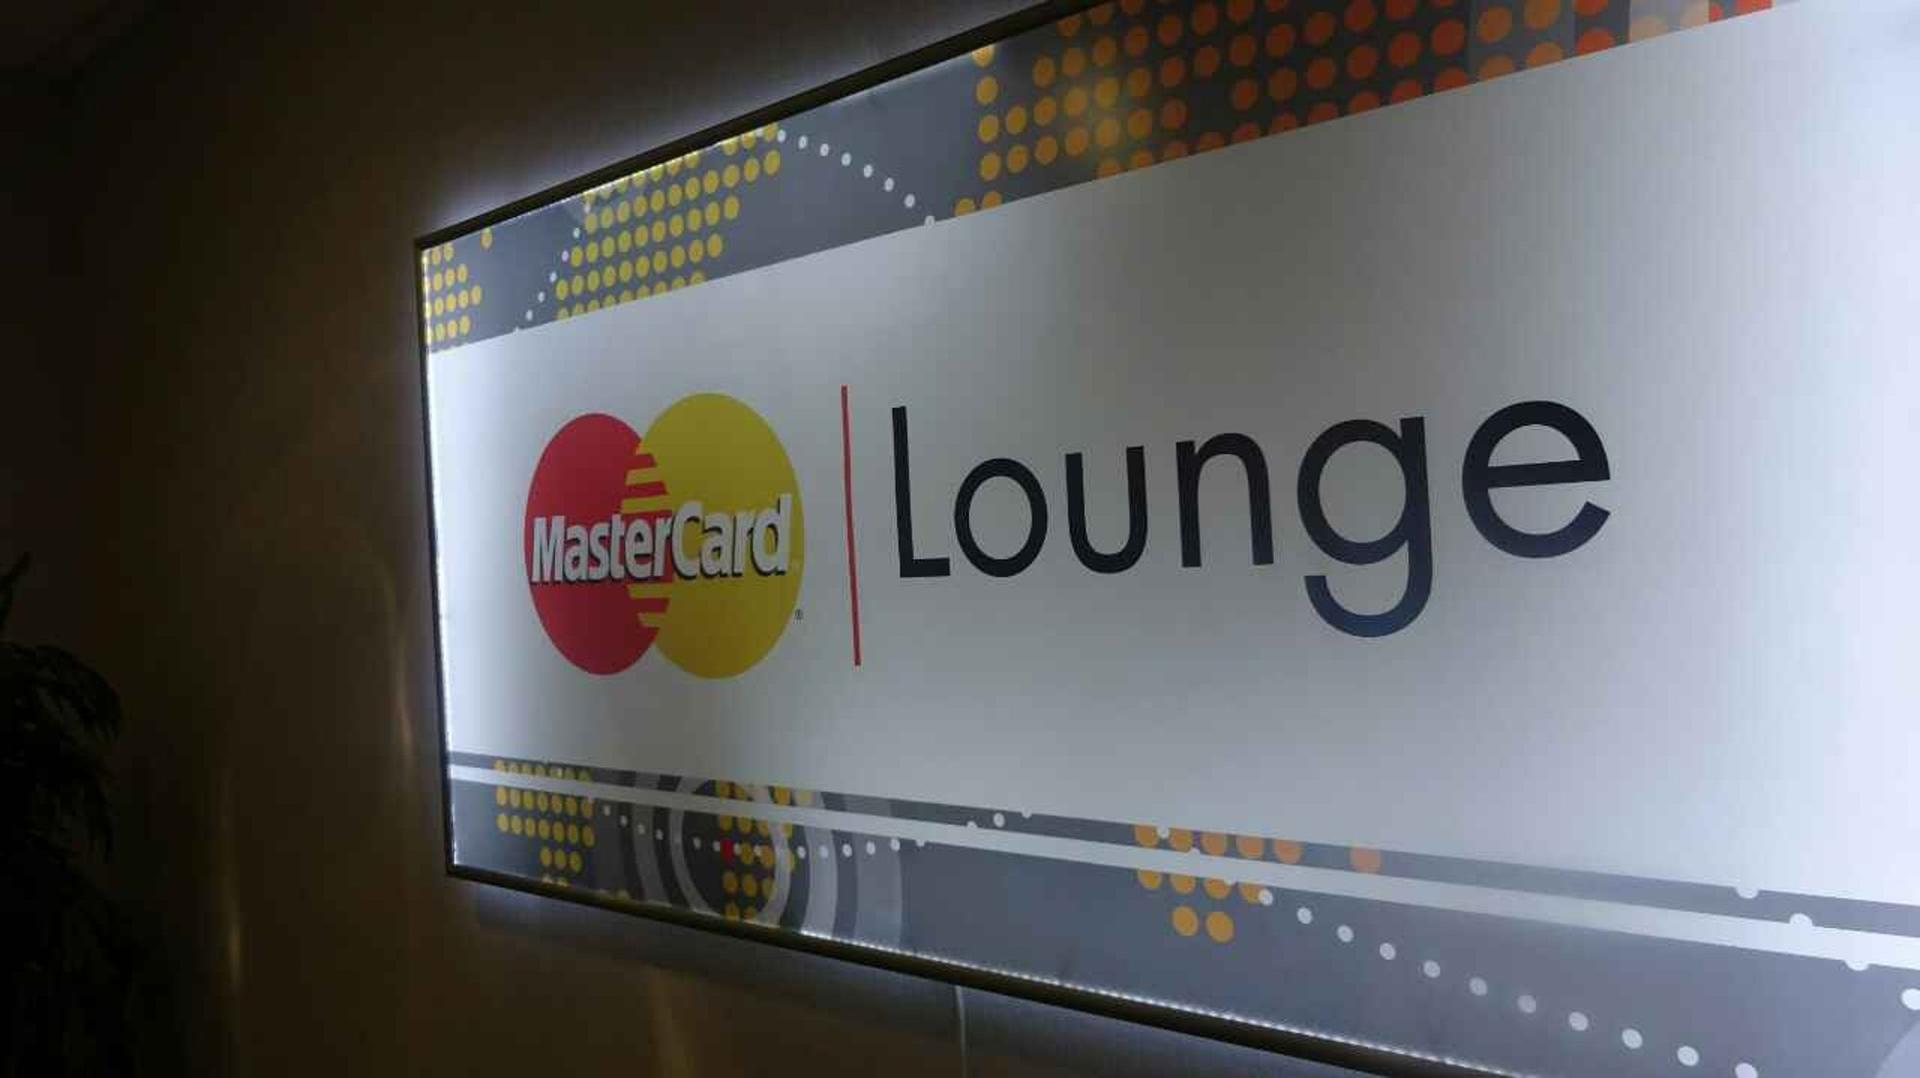 Mastercard Business Lounge image 11 of 36